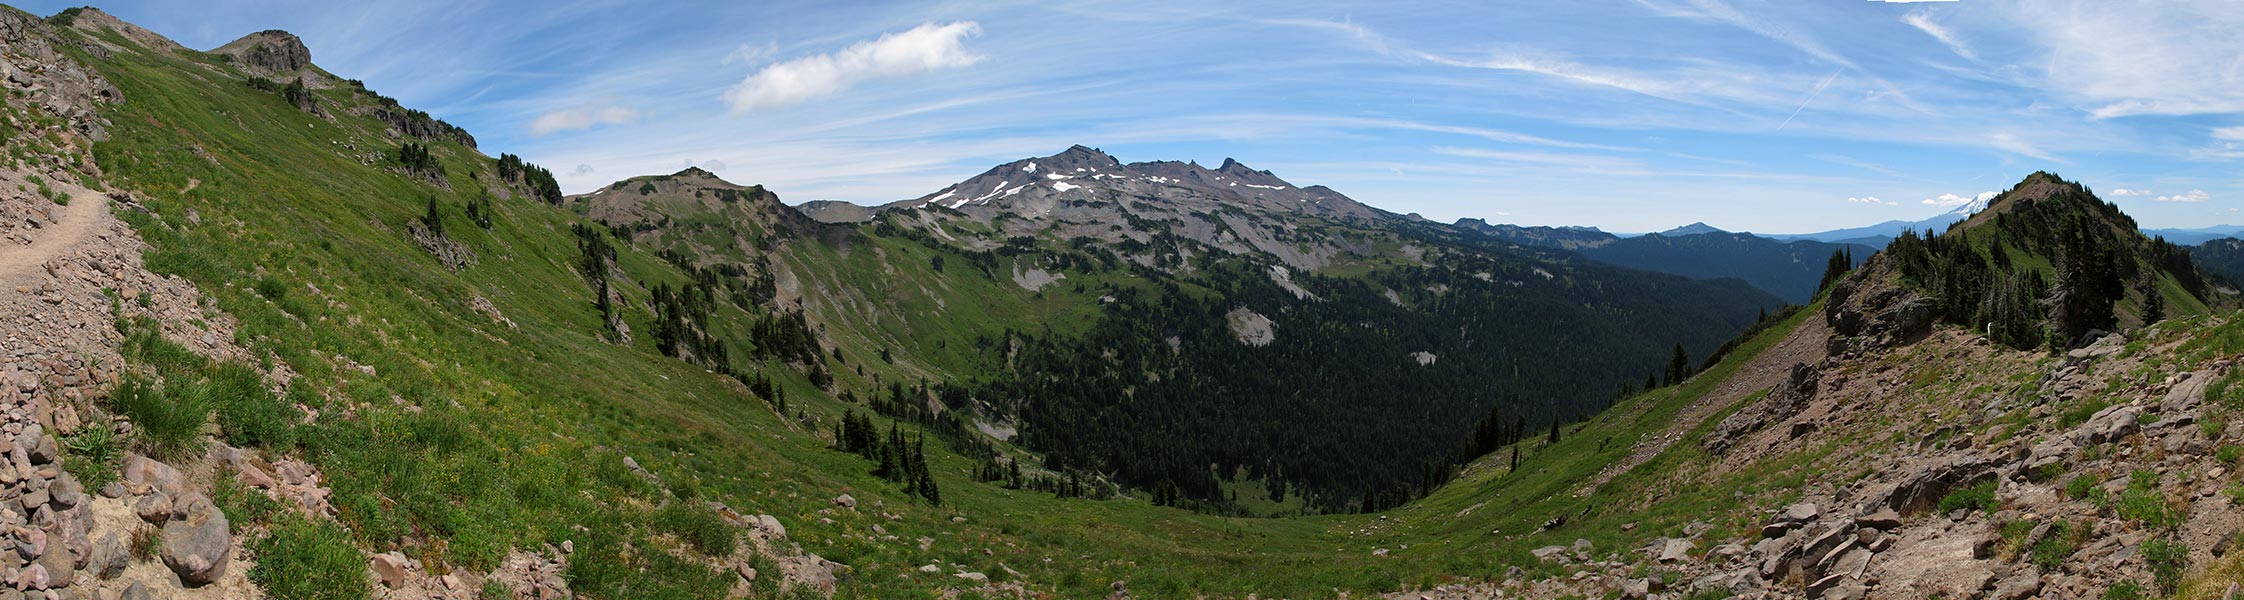 Goat Ridge panorama [Lily Basin Trail, Goat Rocks Wilderness, Lewis County, Washington]